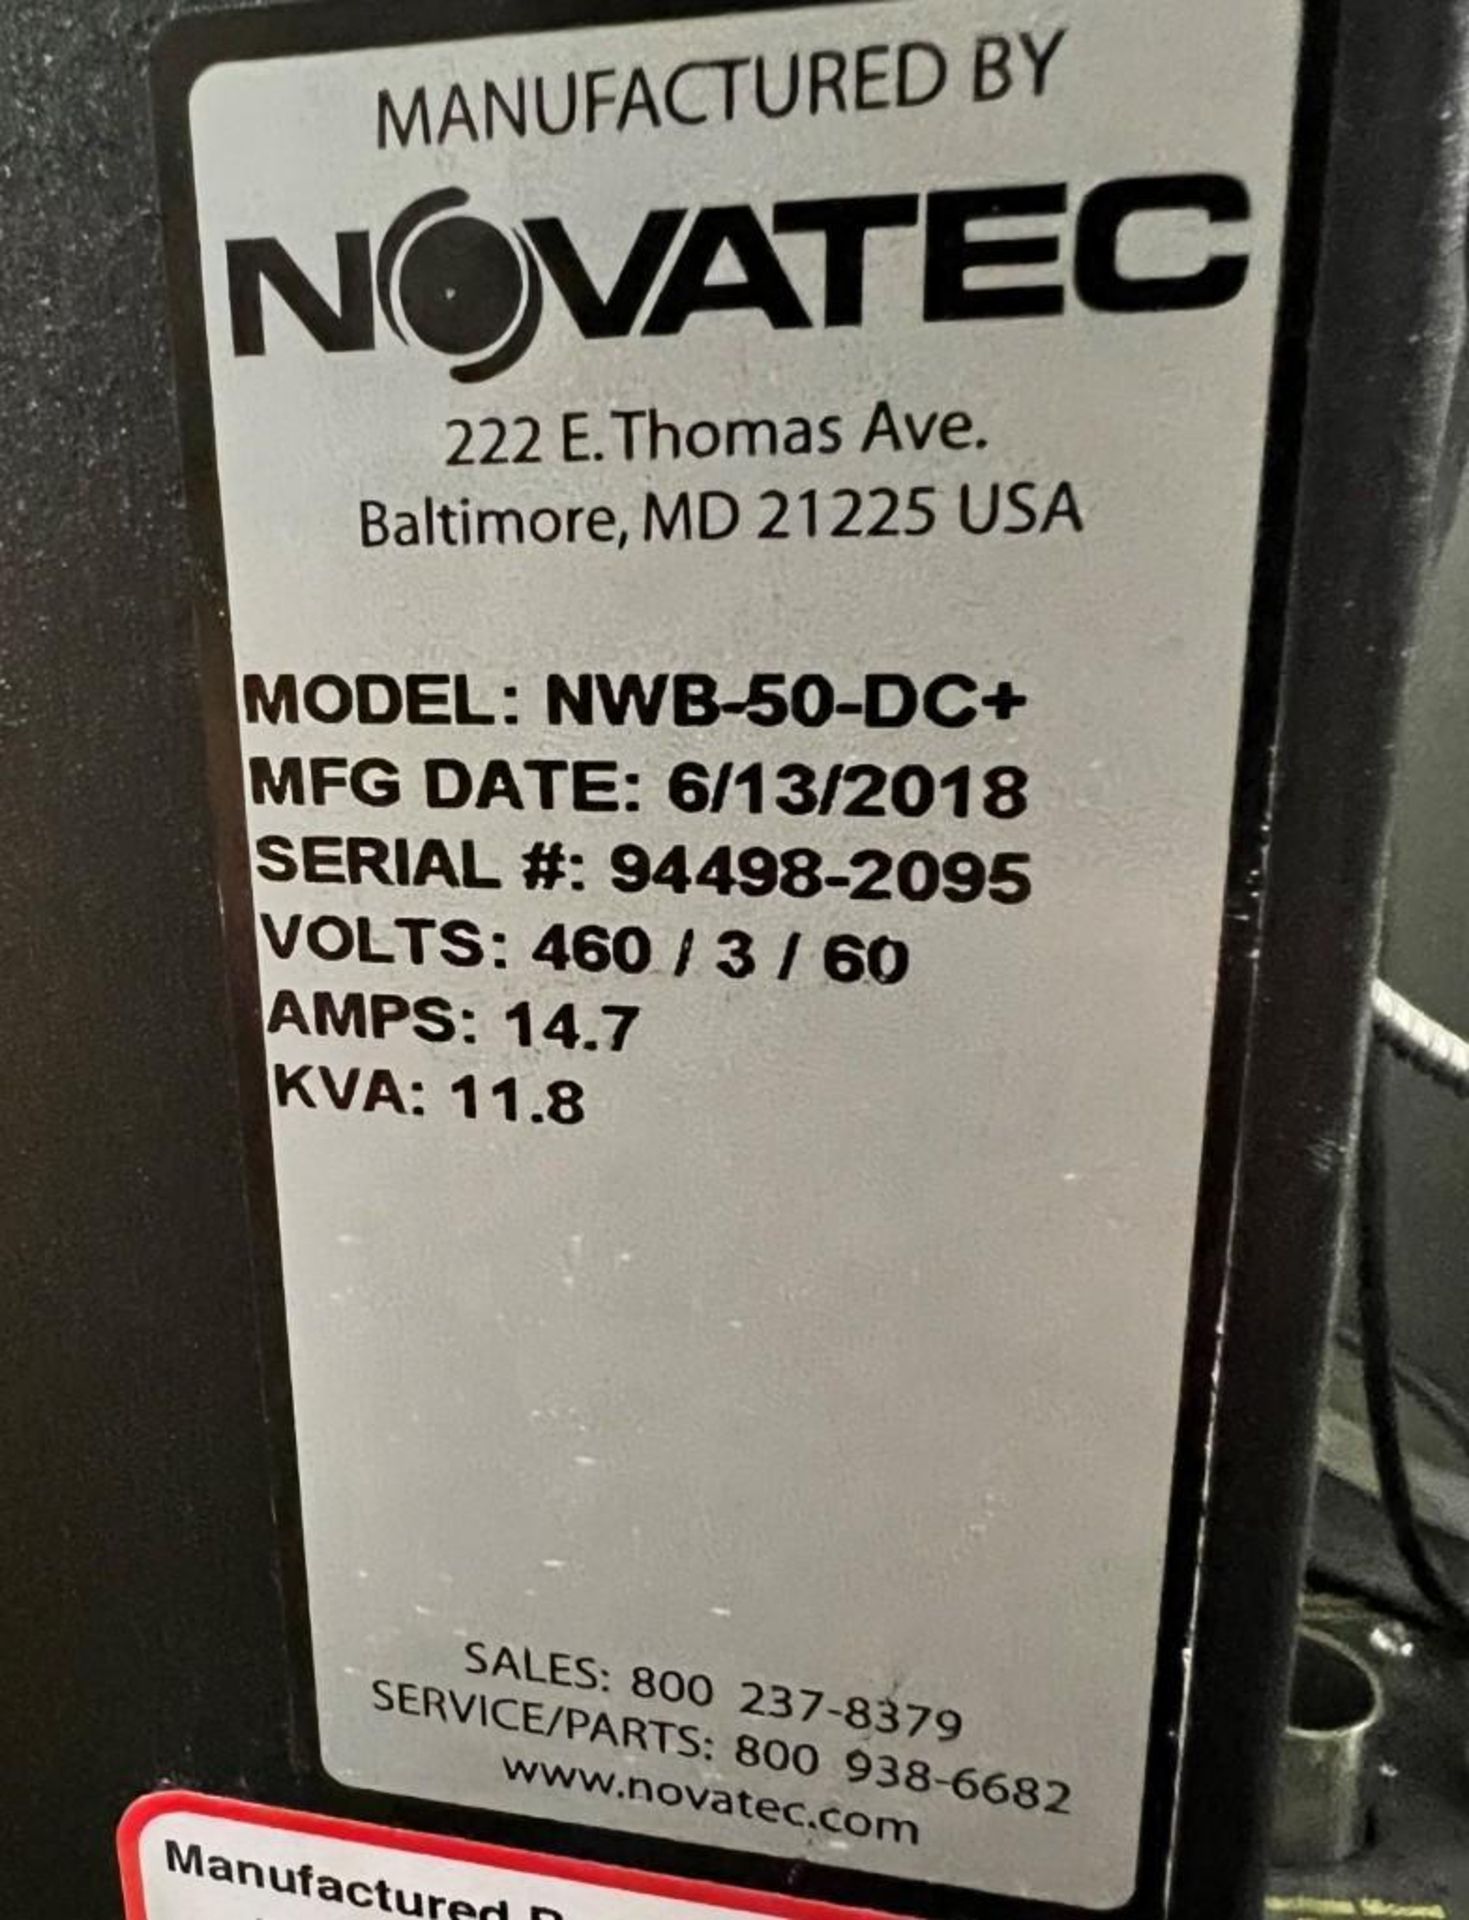 Novatec NovaWheel Portable Dry/Convey Series, Model NWB-50-DC+, Serial# 94498-2095, Built 6/13/2018. - Image 15 of 15